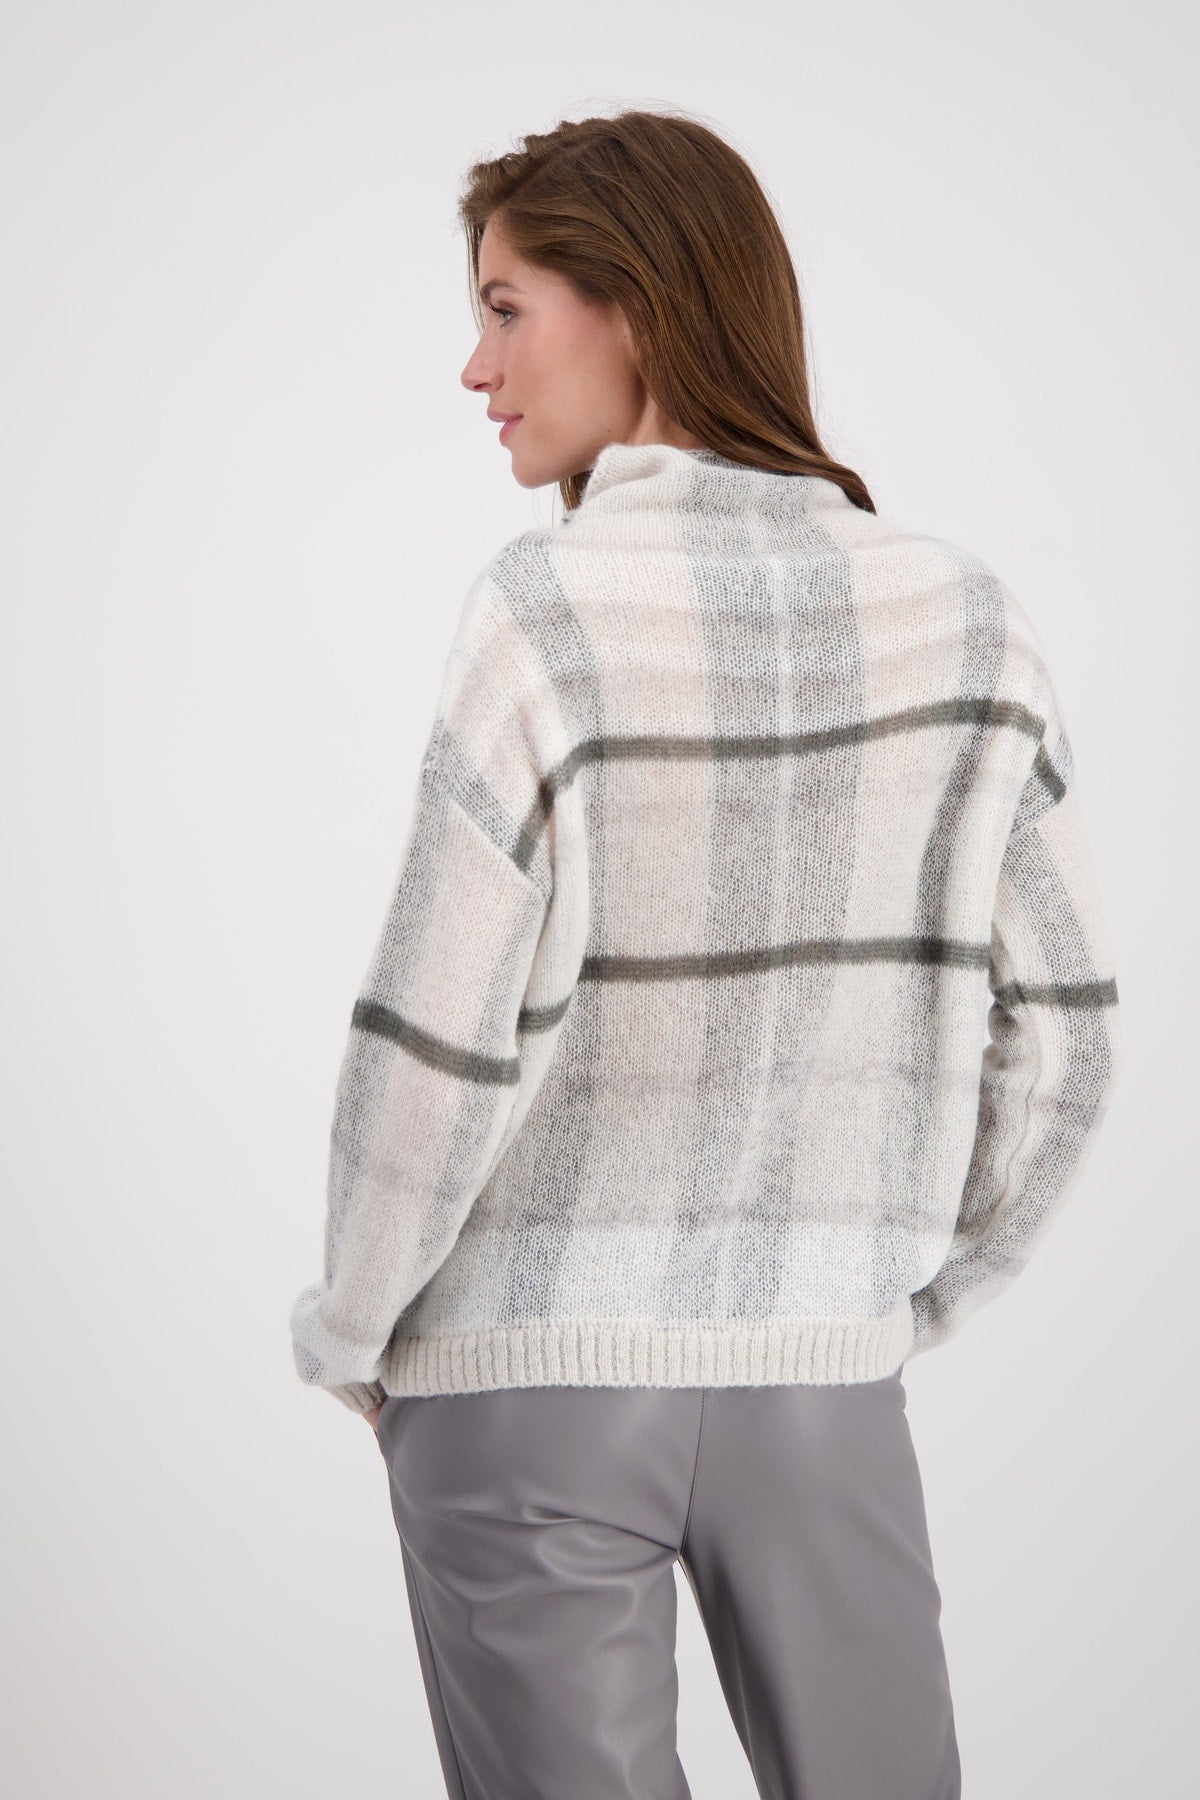 Monari Jacquard Sweater